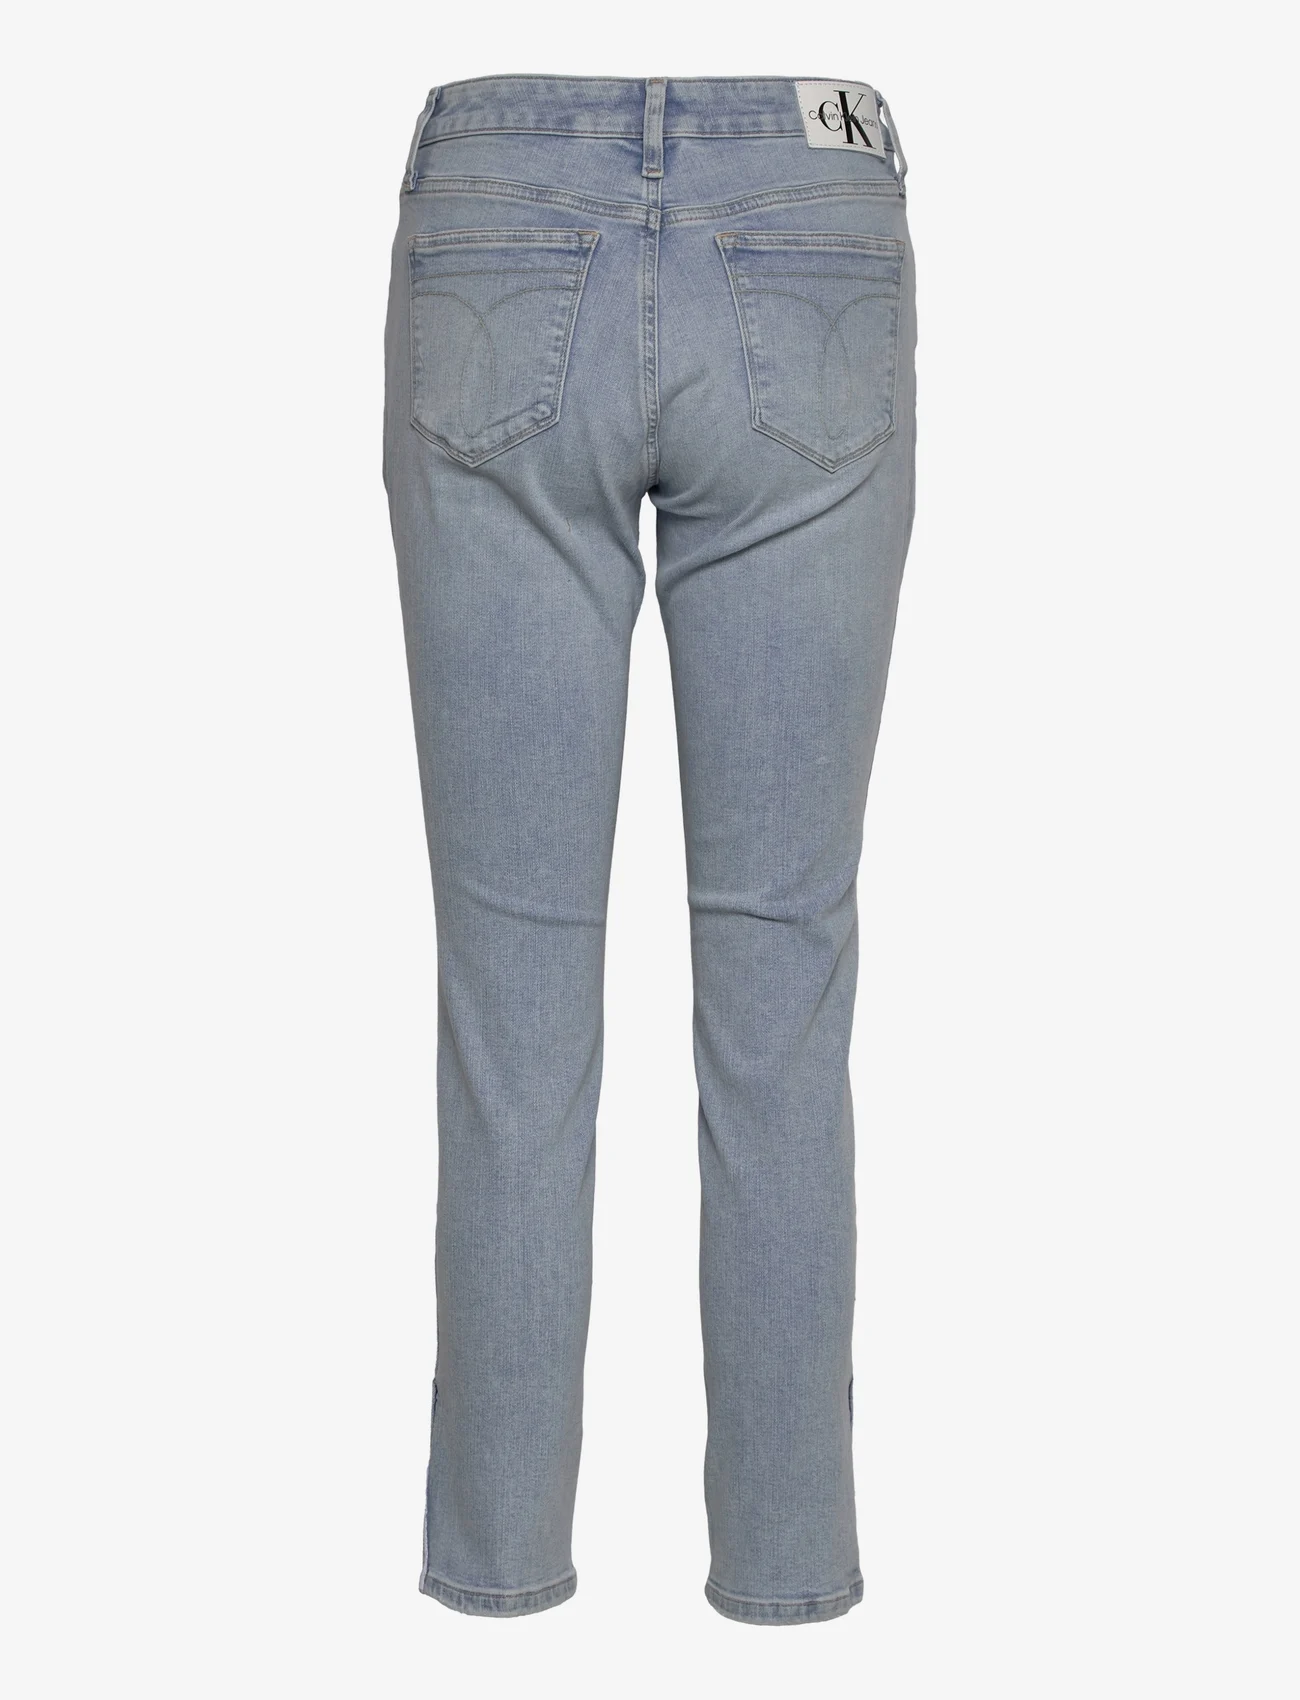 Calvin Klein Jeans - MID RISE SKINNY ANKLE - dżinsy skinny fit - denim light - 1